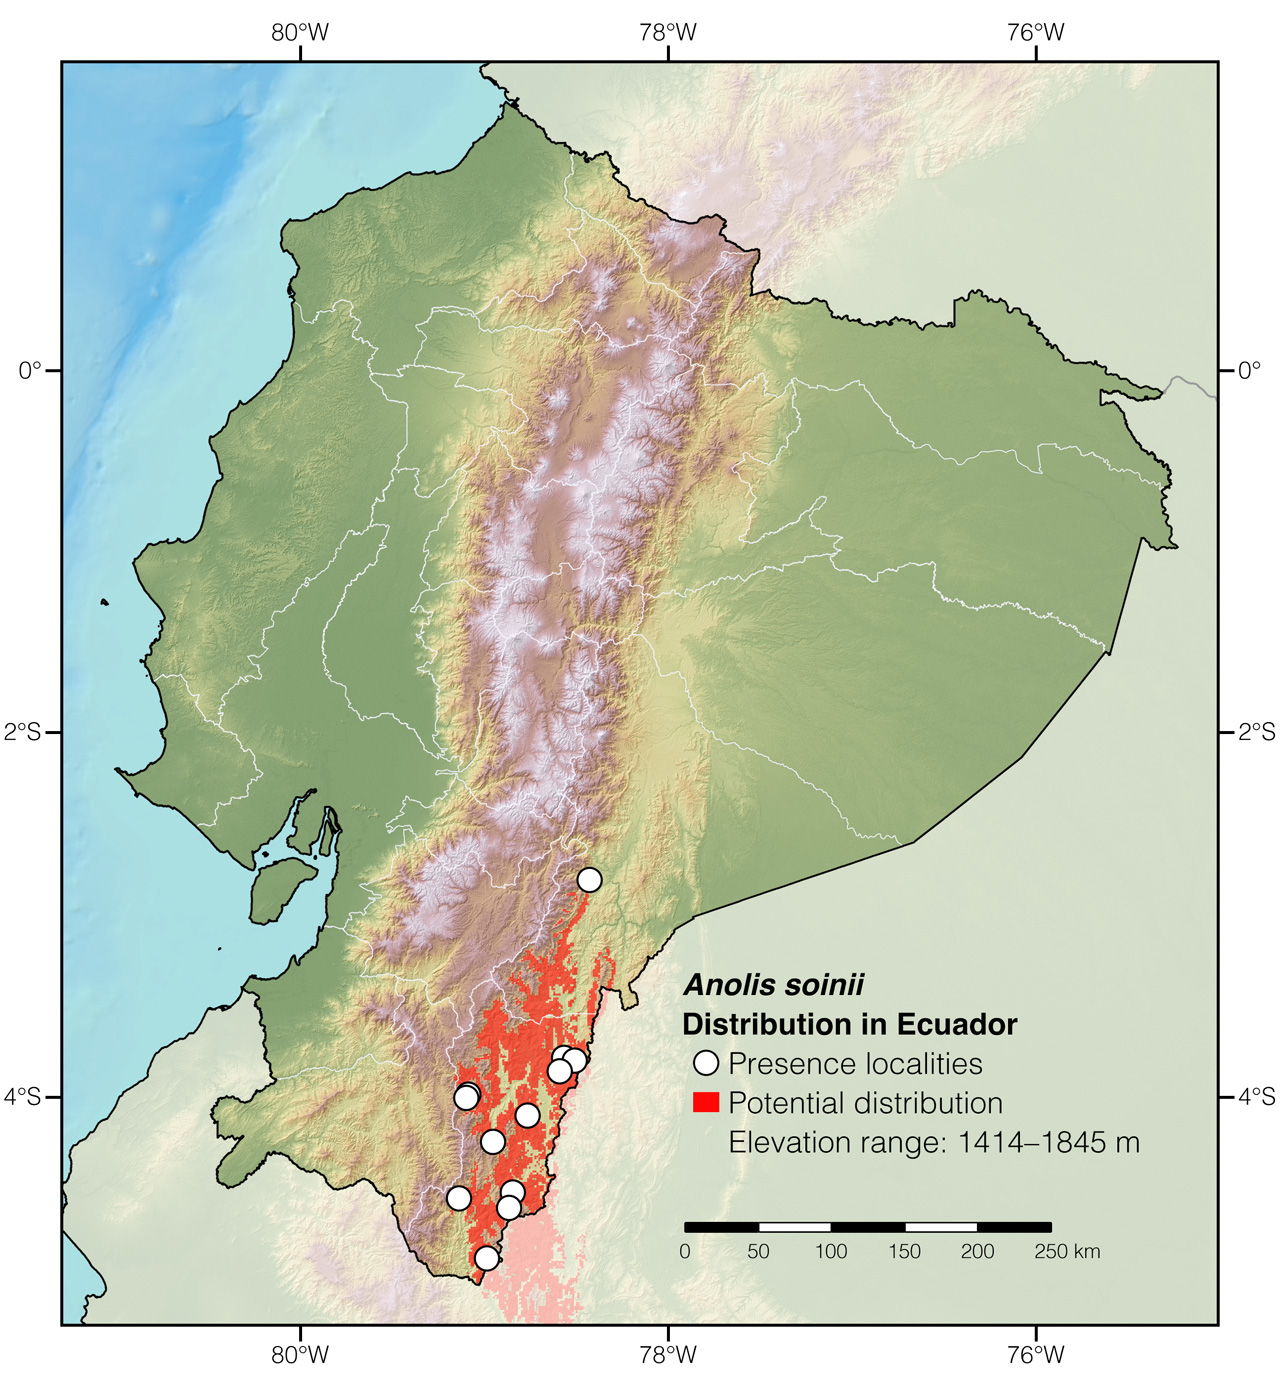 Distribution of Anolis soinii in Ecuador